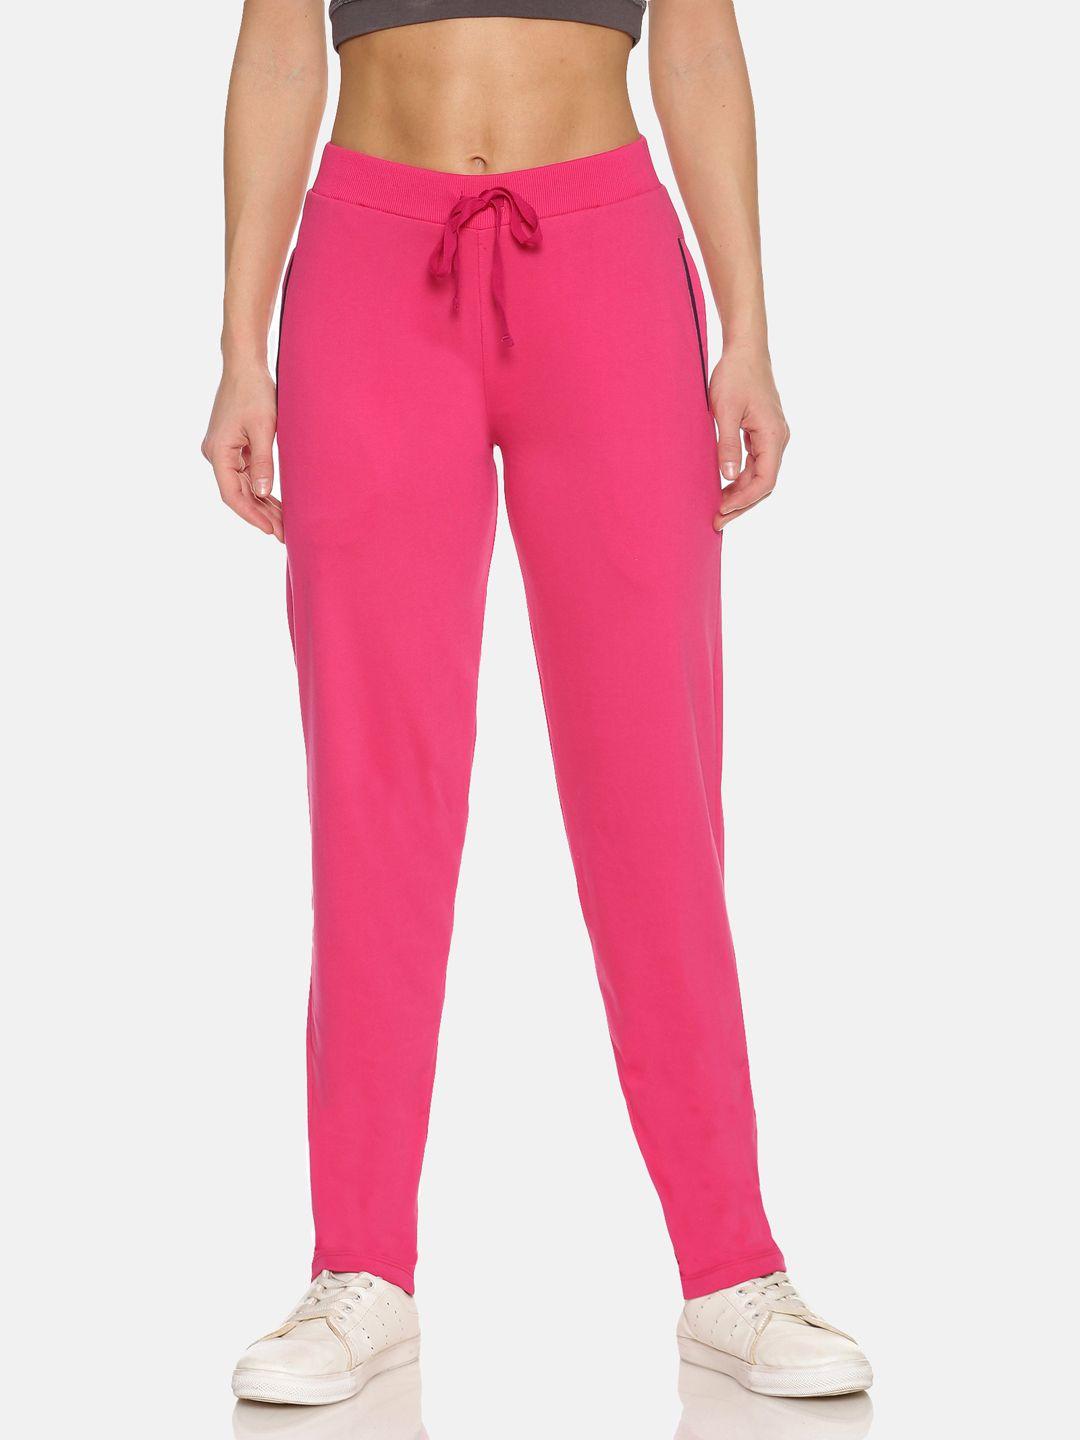 femea women pink solid track pants